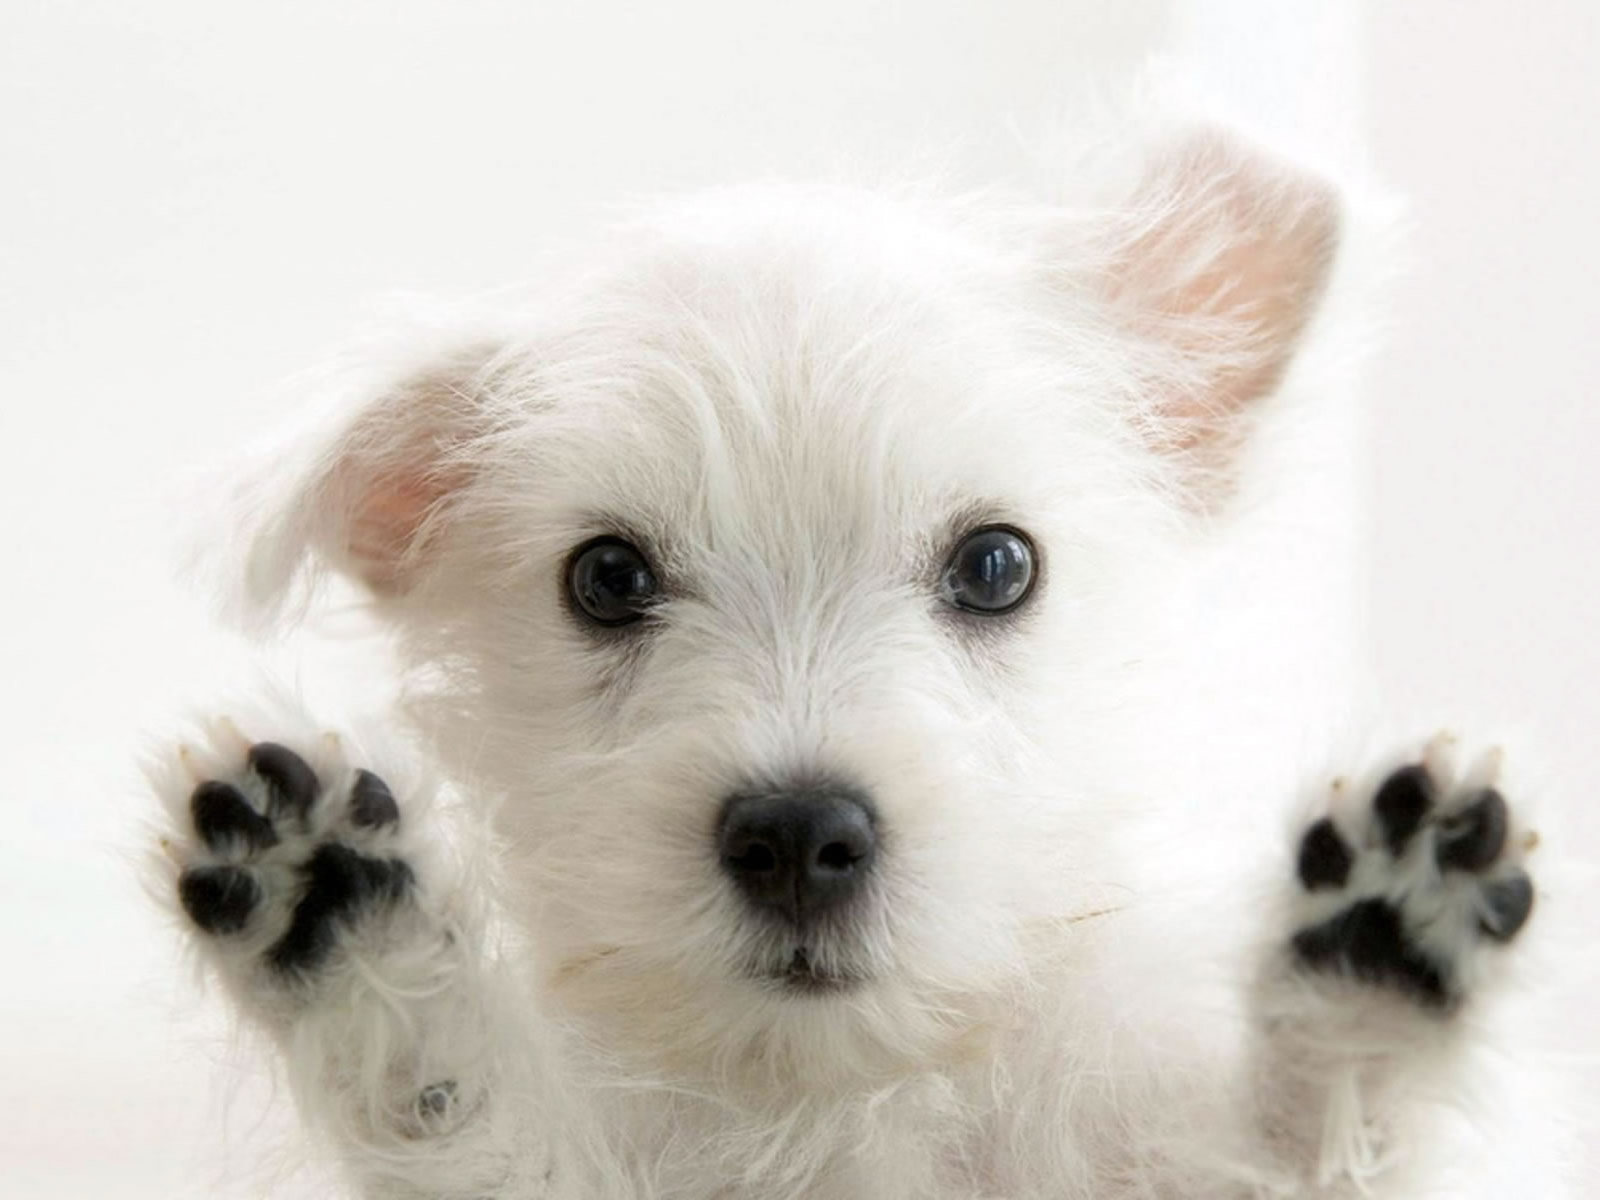 http://2.bp.blogspot.com/-NmyKQKzzUy8/T893MbzPBII/AAAAAAAAGAs/sX2HhWJnyyg/s1600/Cute+white+dog.jpg